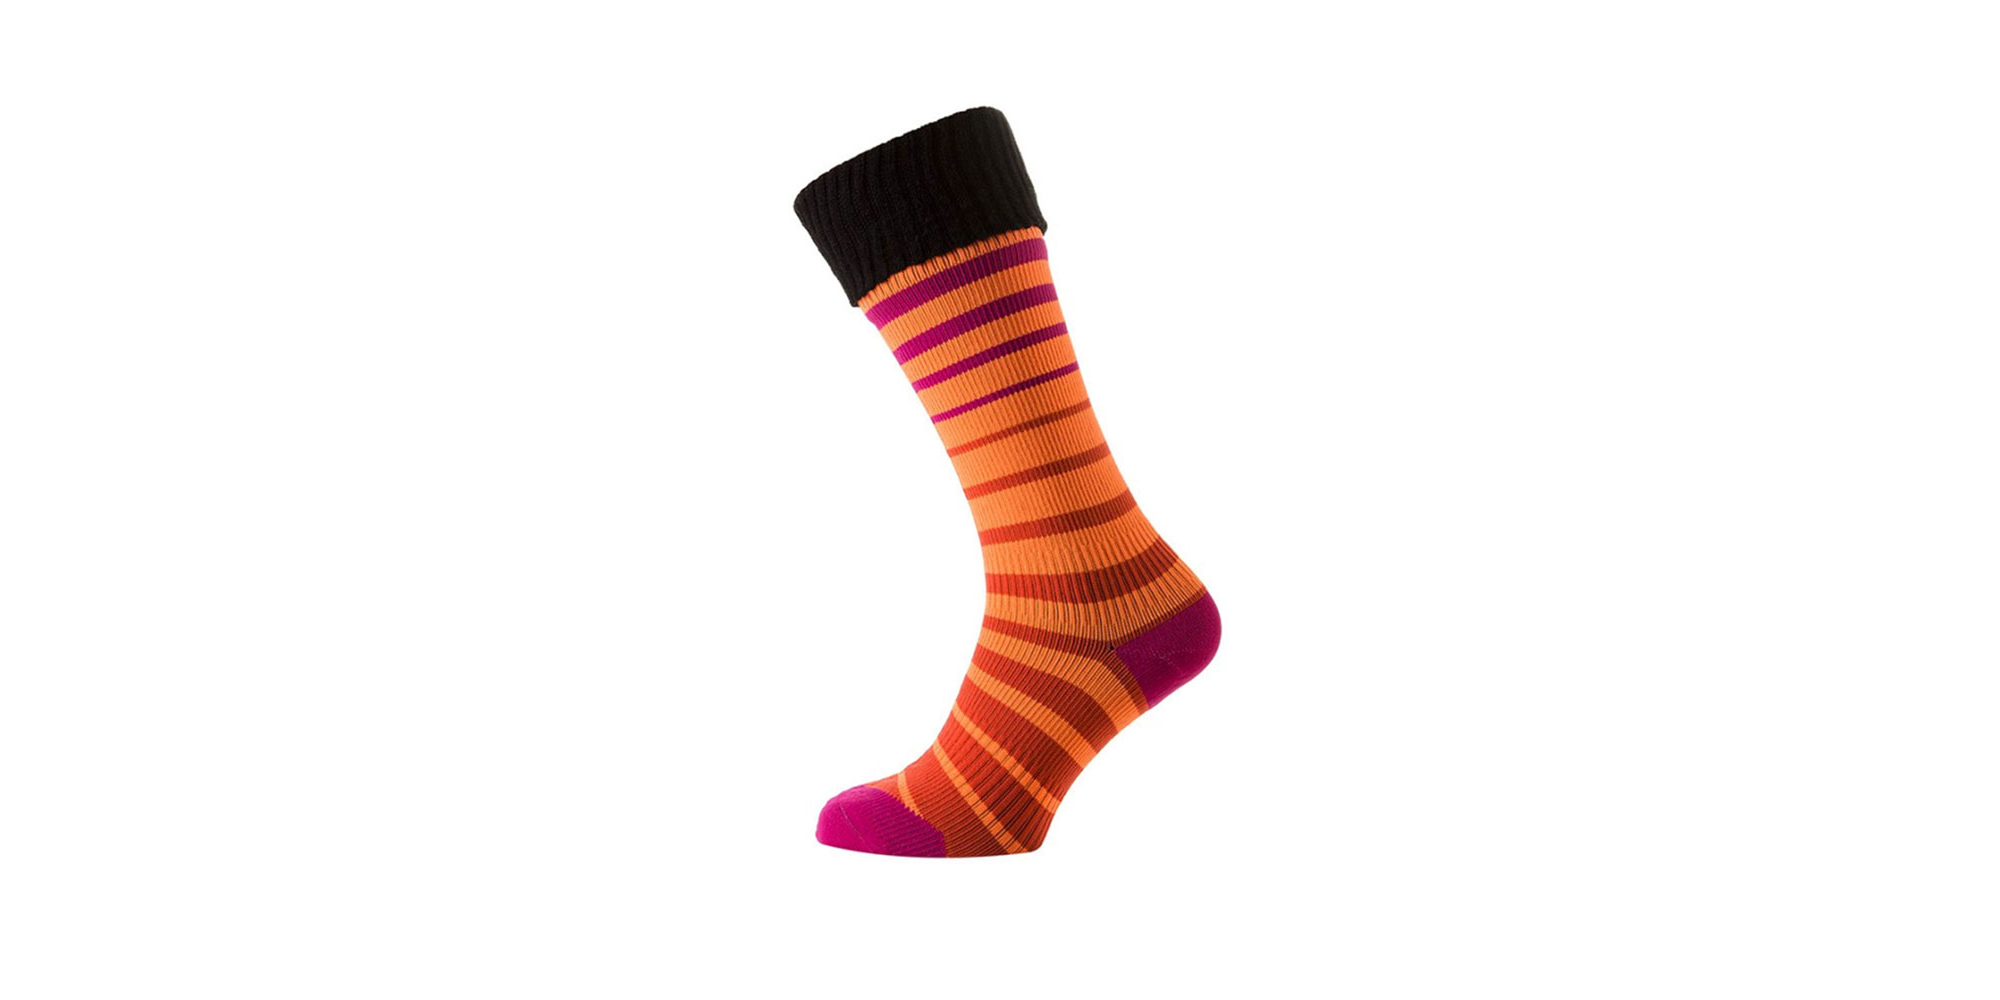 Nepromokavé barevné ponožky Thin Mid Cuff od anglické značky SealSkinz 